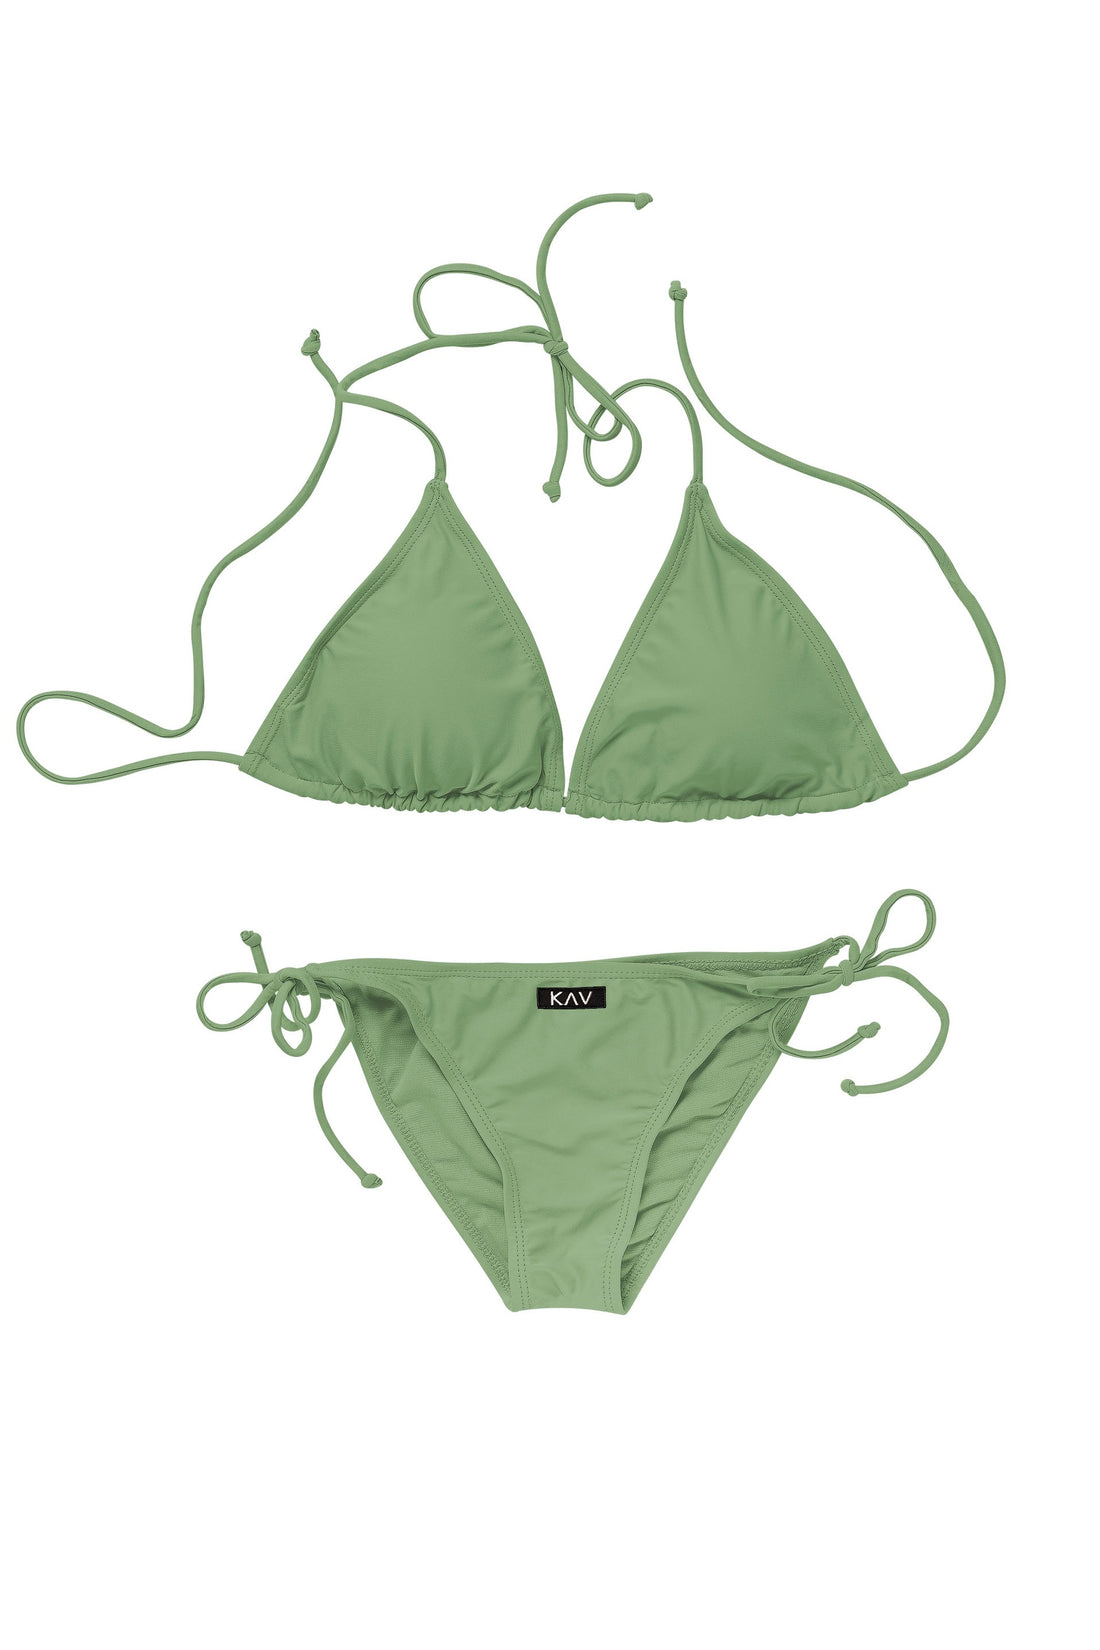 Olive Green Minimal Two Piece Triangle Bikini